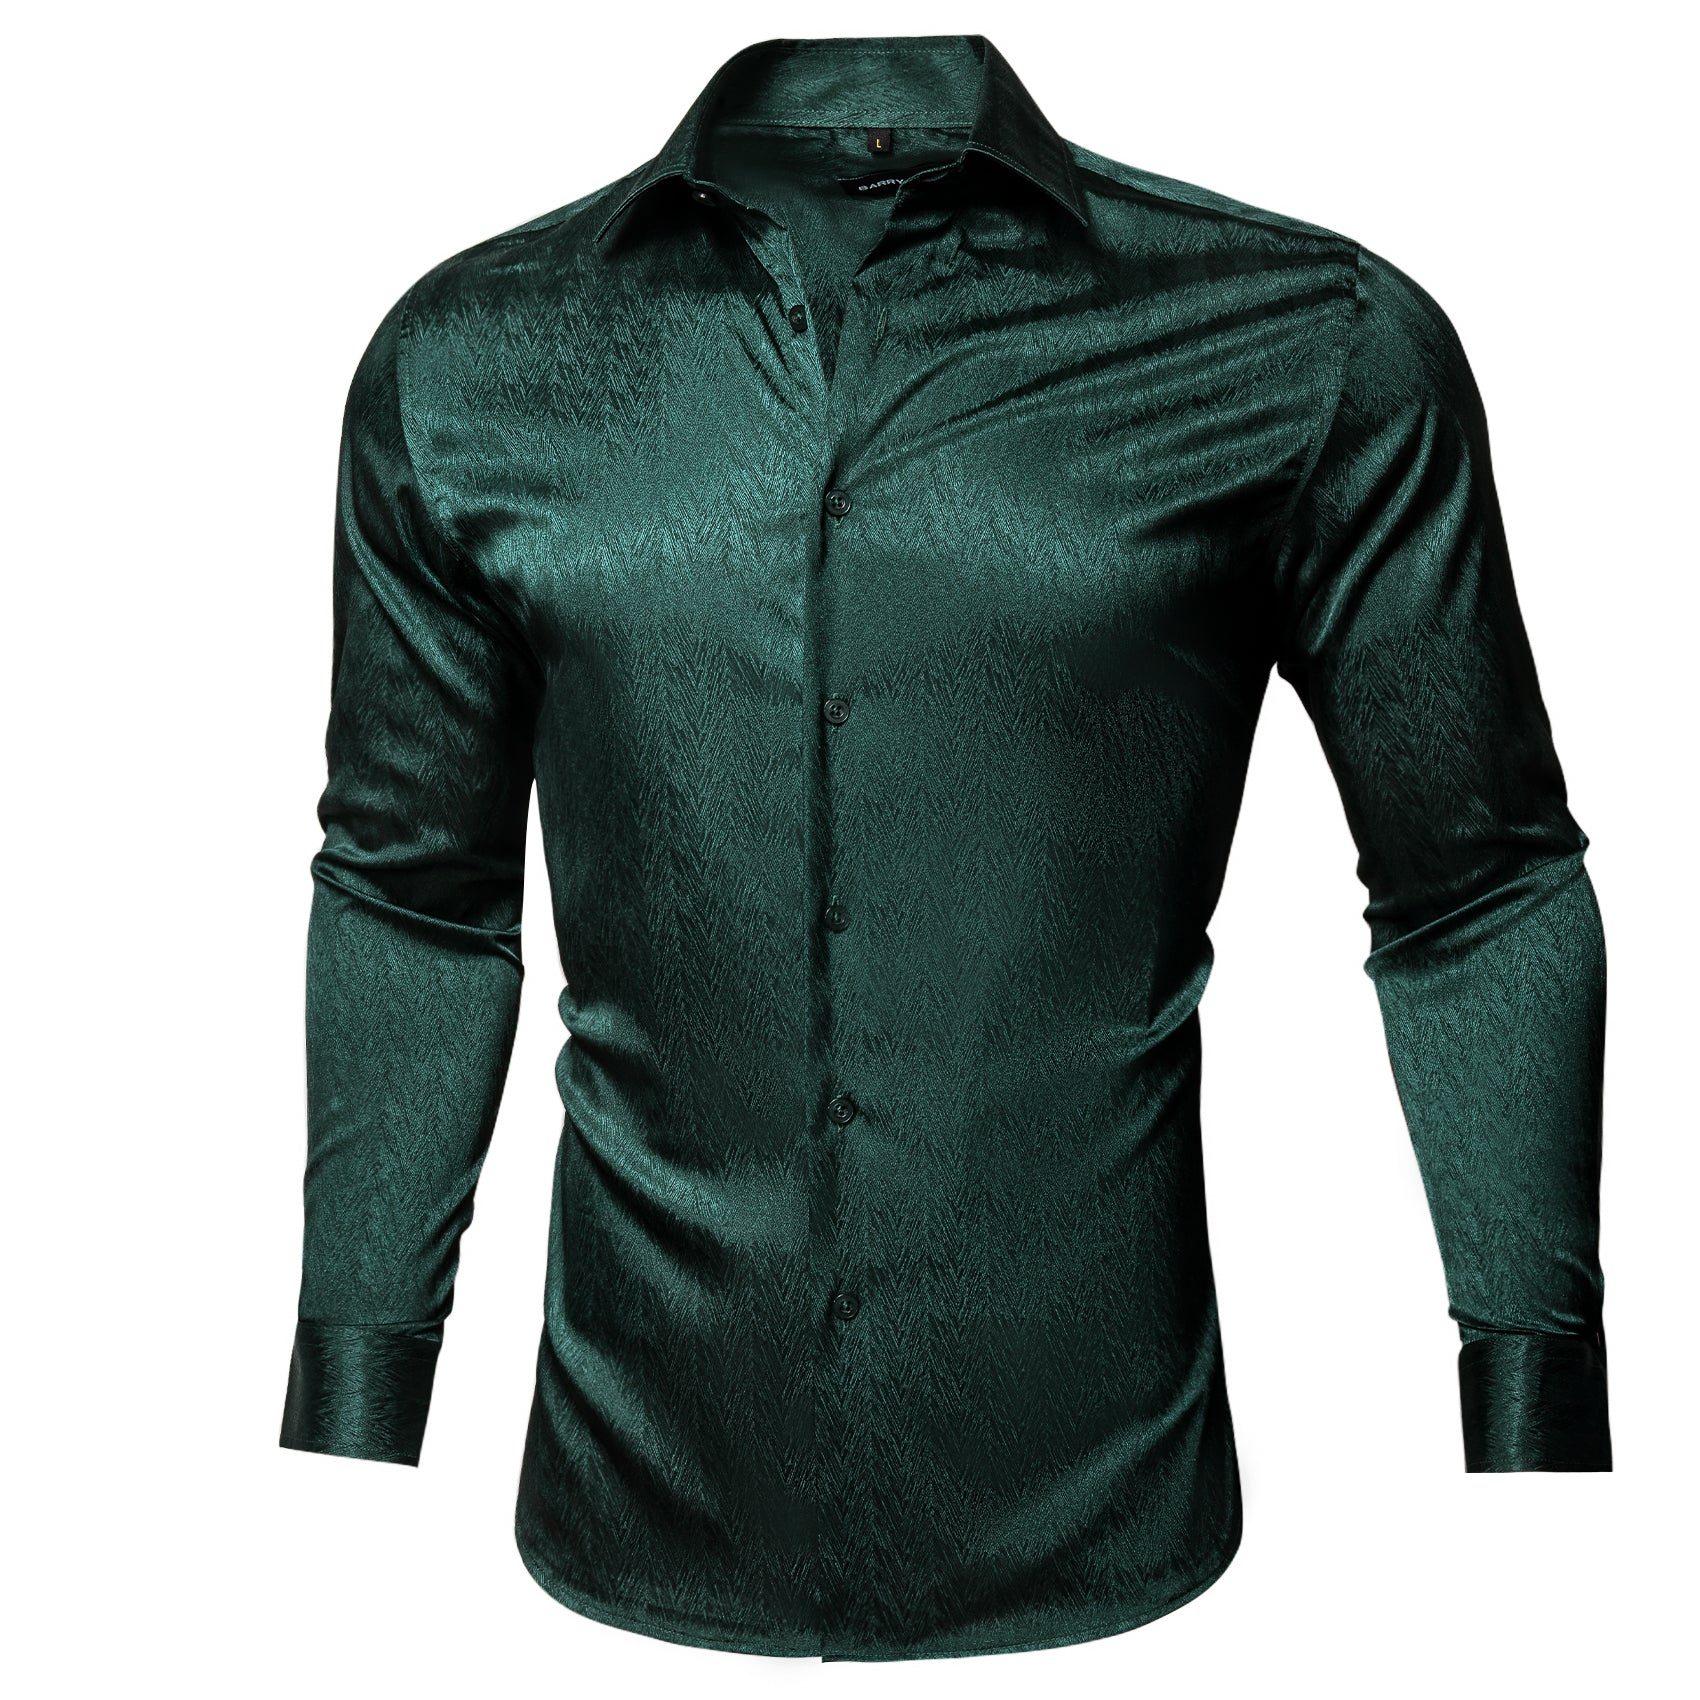 Barry.wang Classy Green Solid Silk Shirt